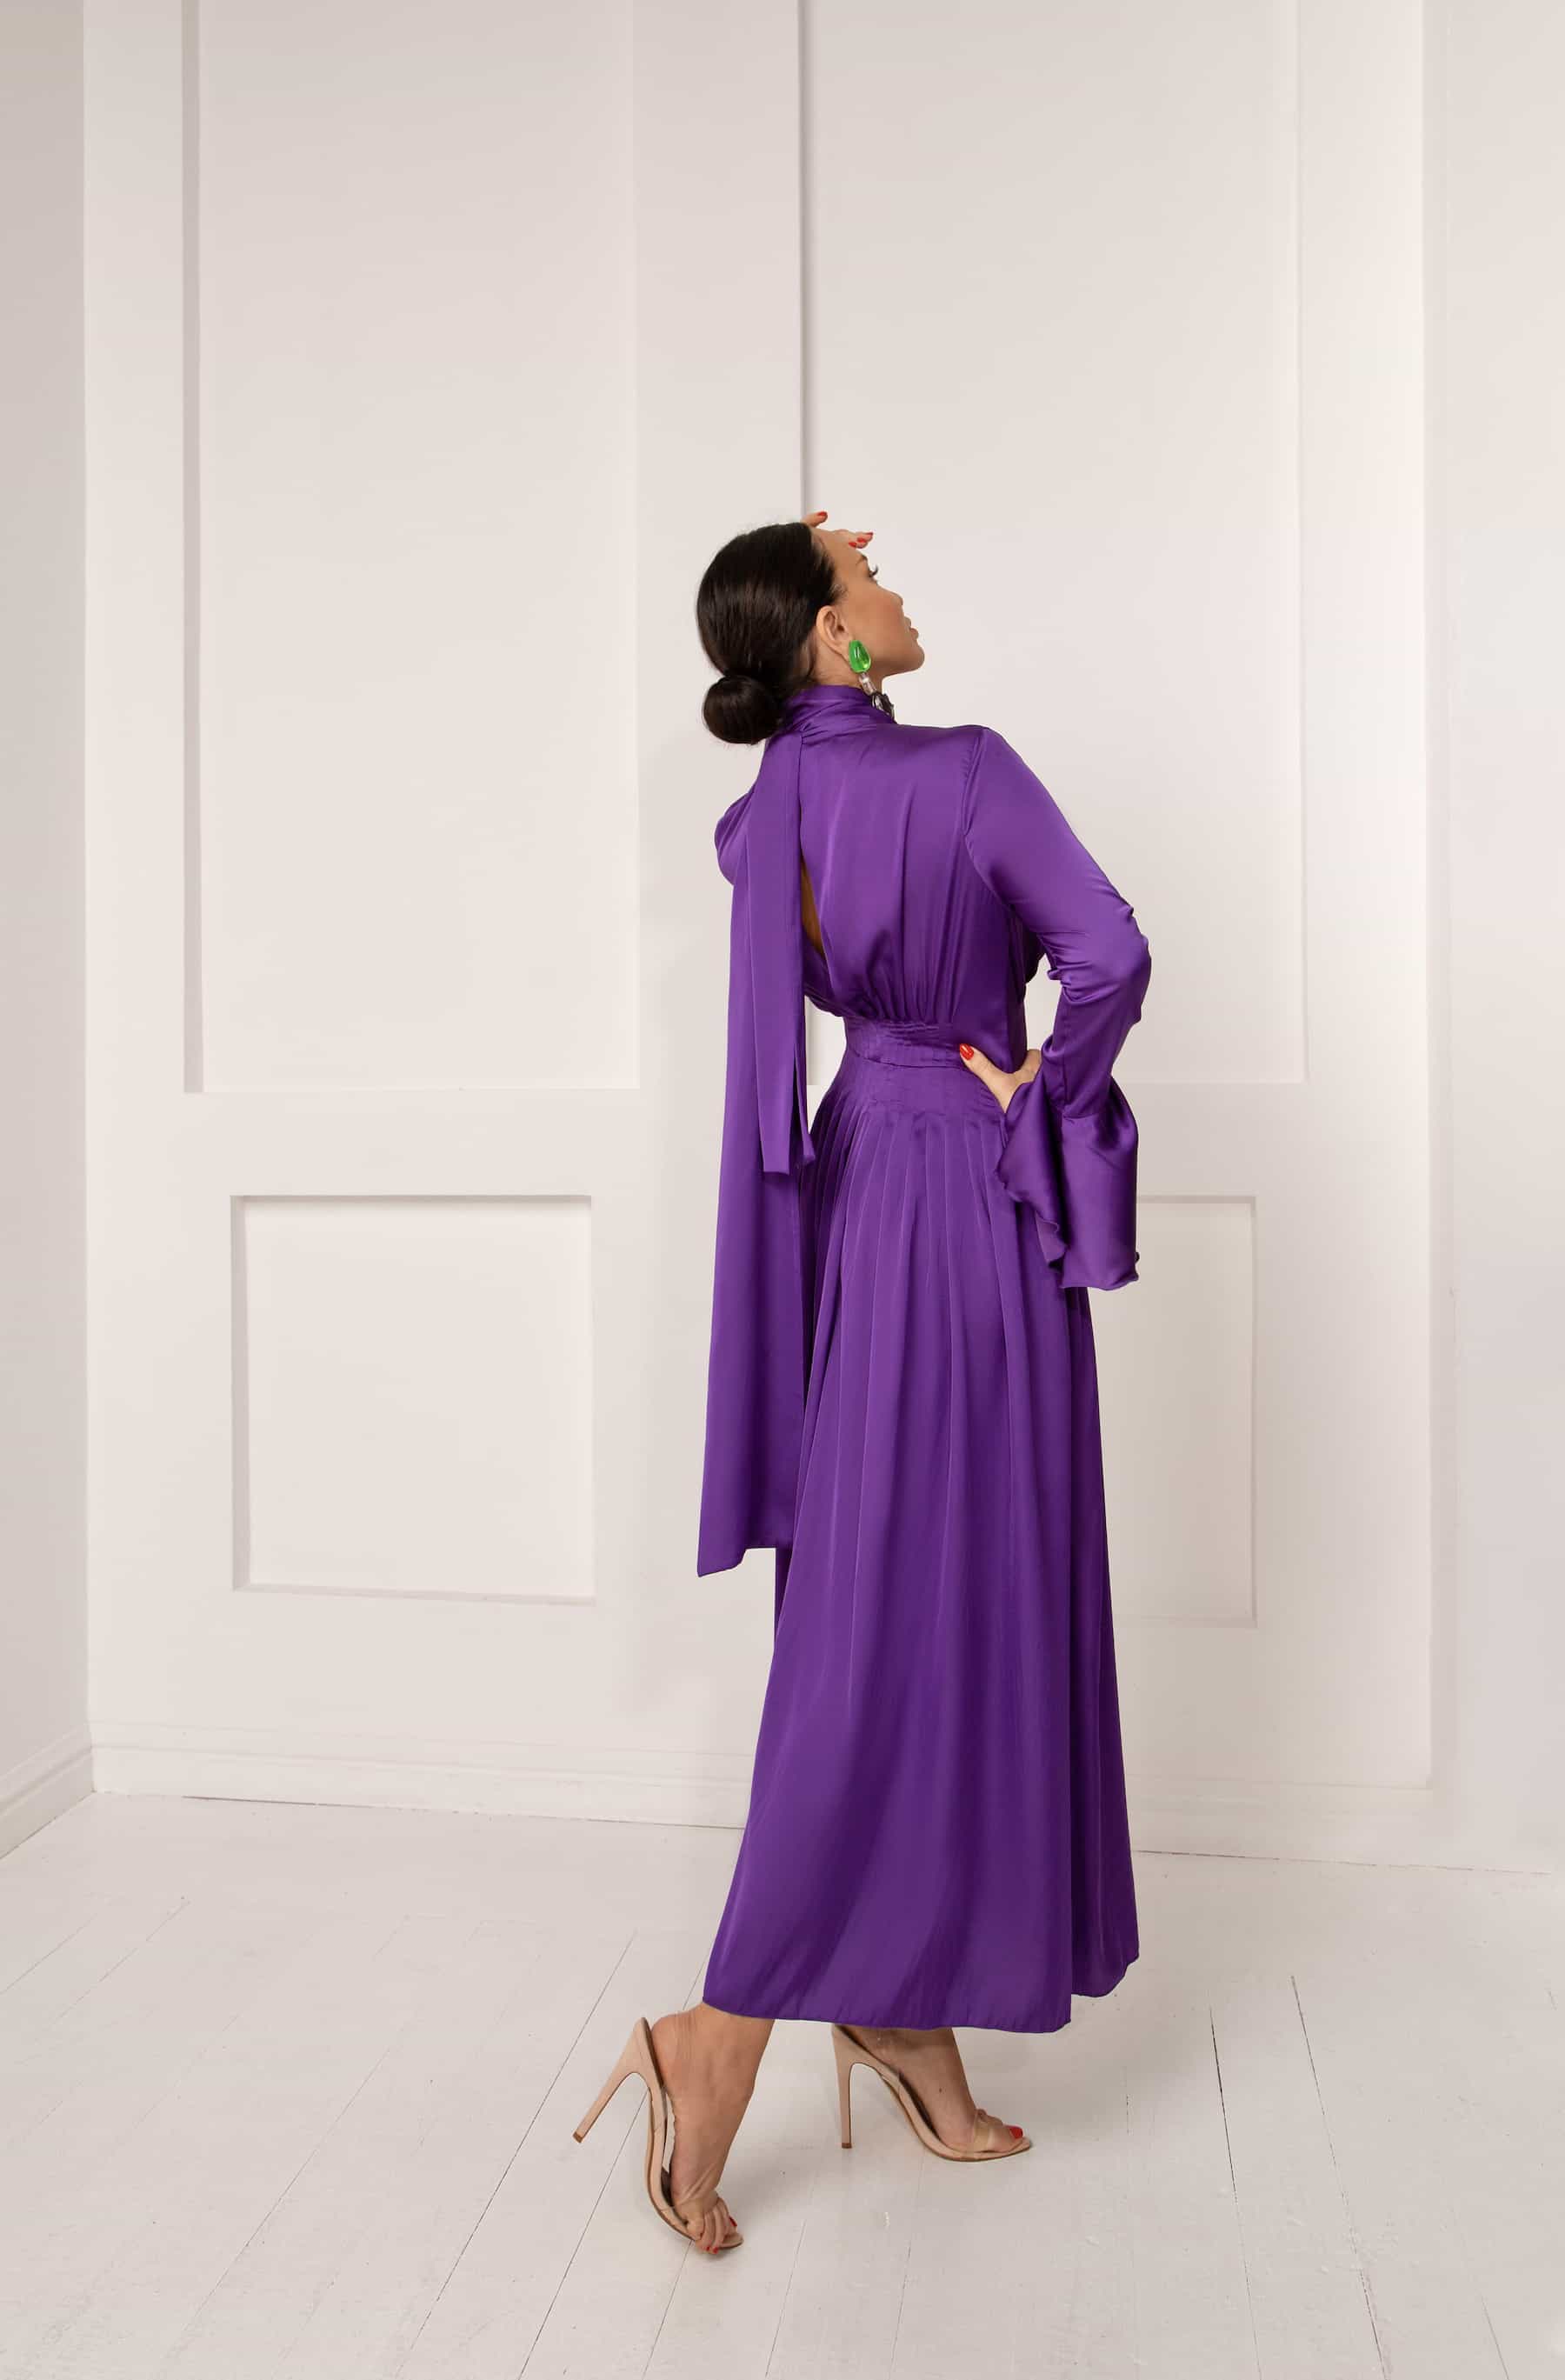 Violet cloth with seams, draping at the waist and ruffled sleeves